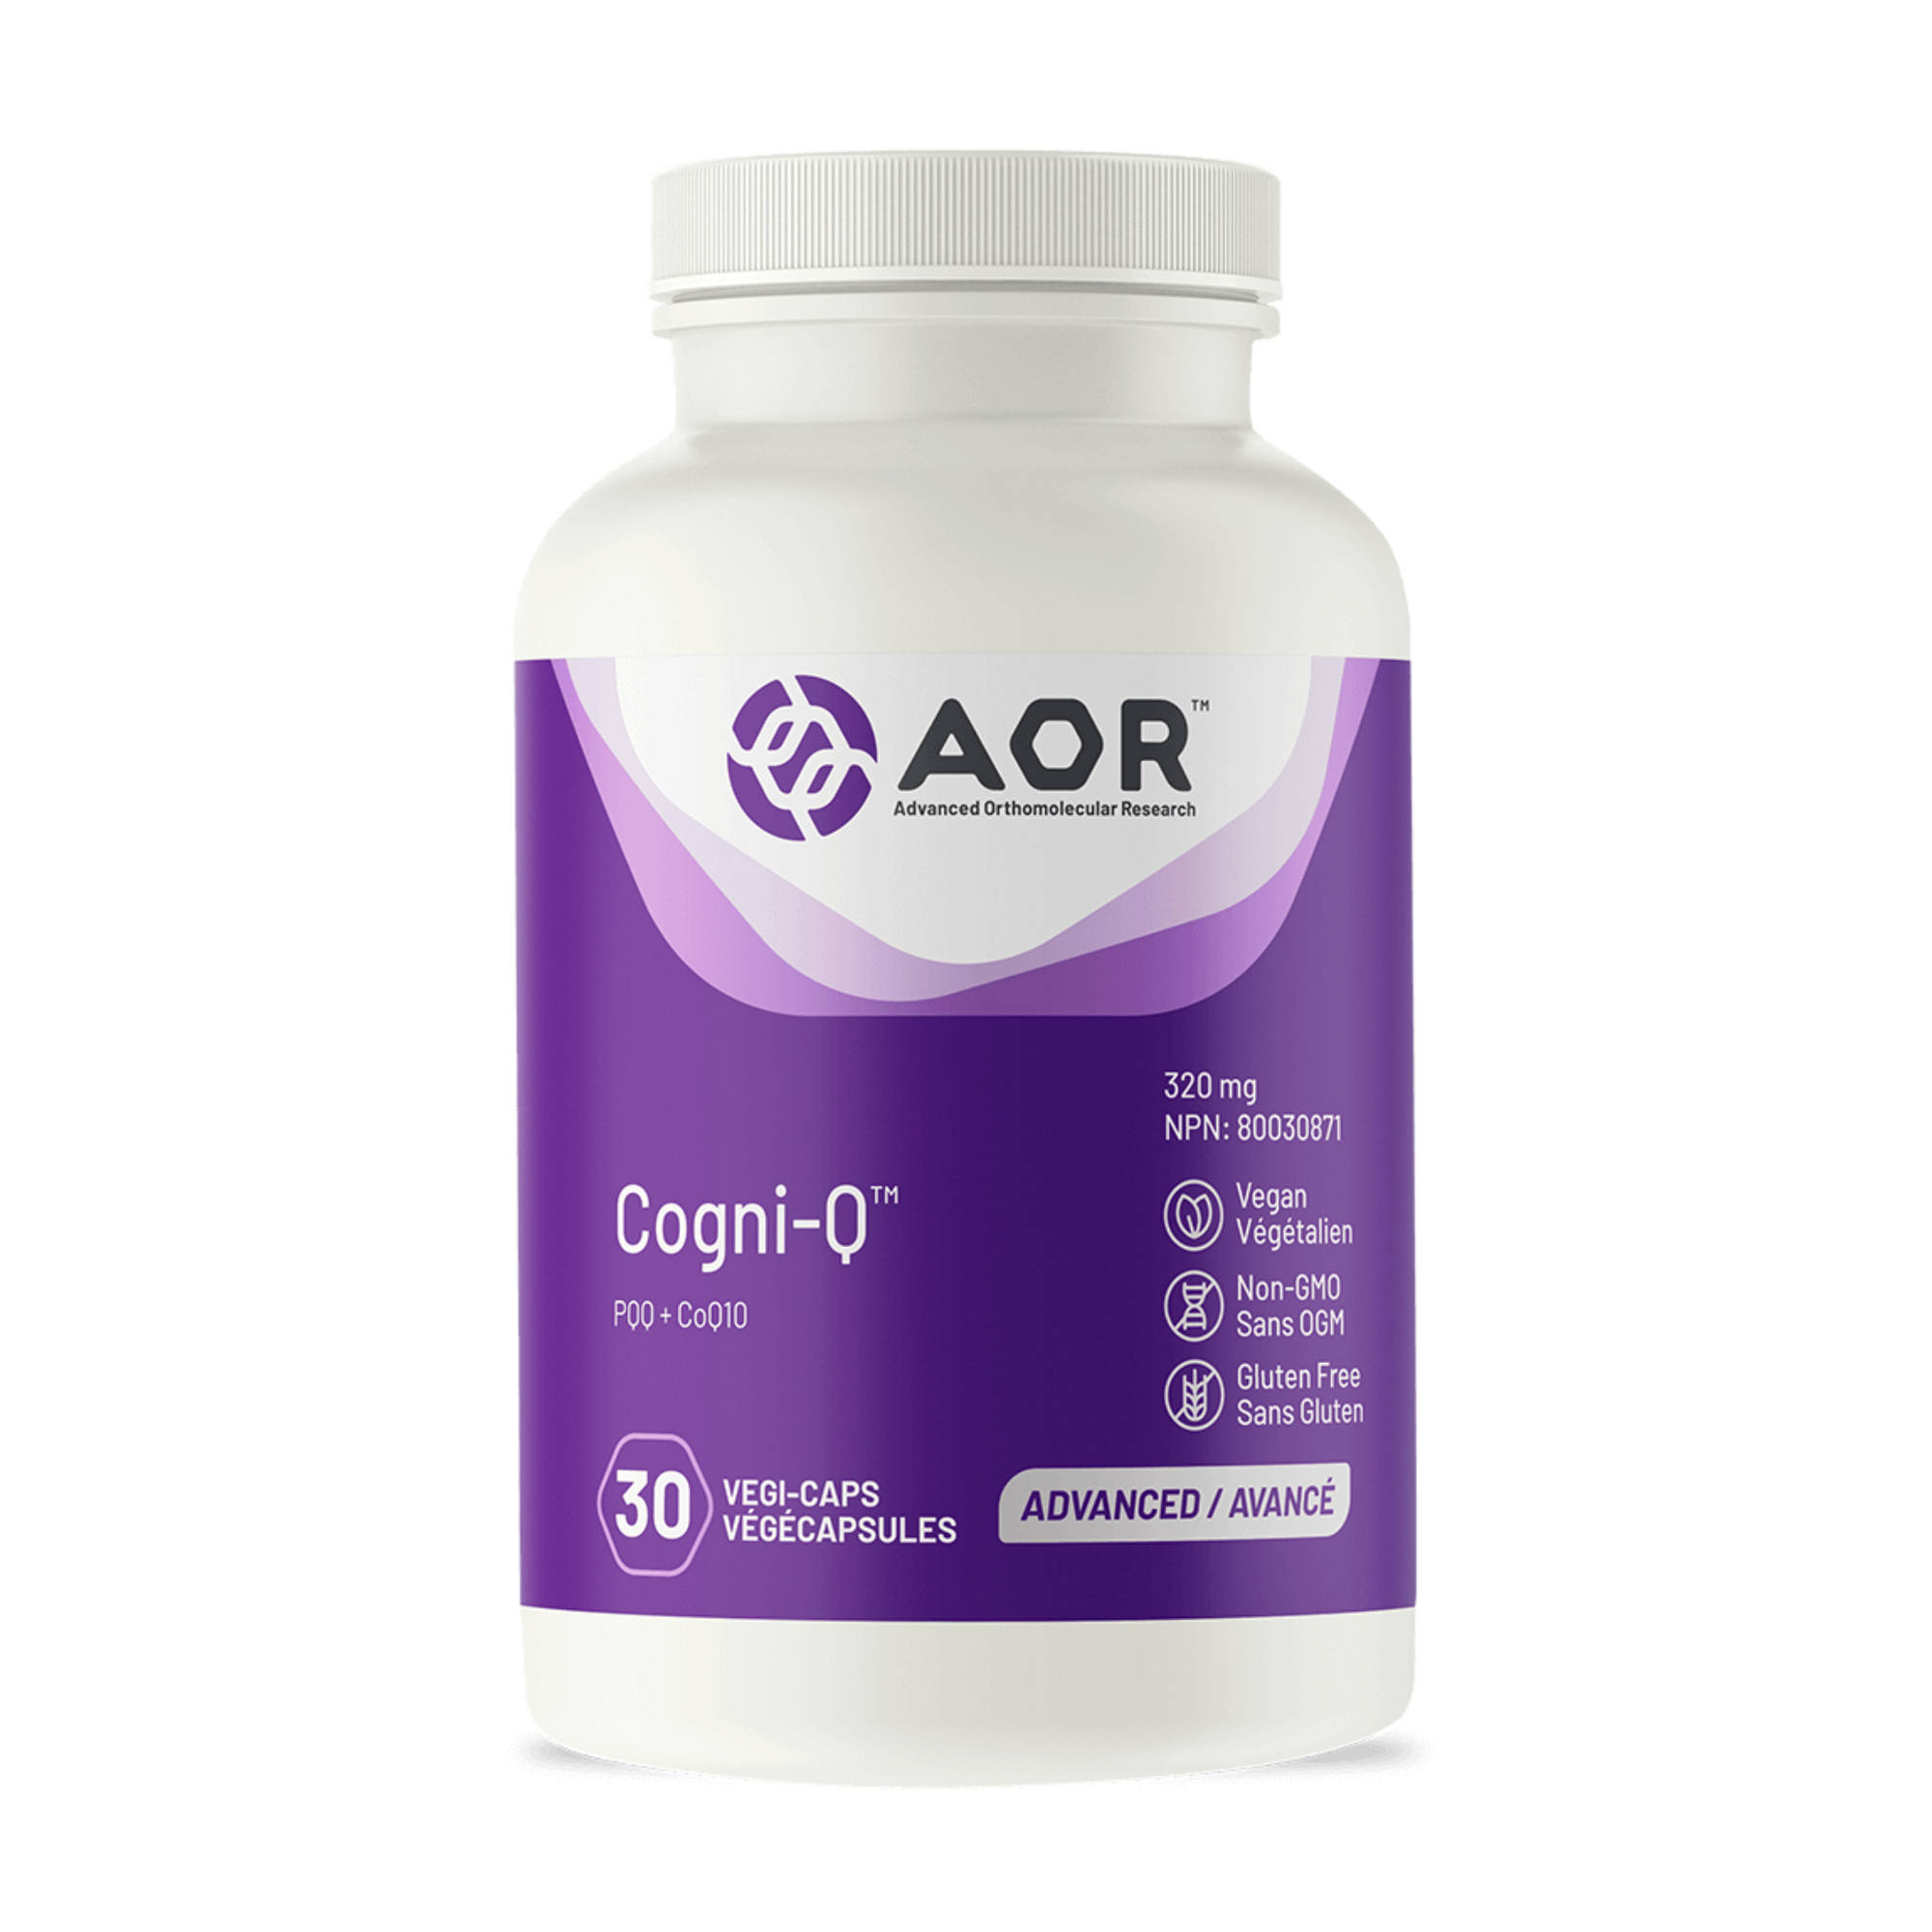 AOR Cogni-Q 30 vegetable capsules - 320mg PQQ and CoQ10